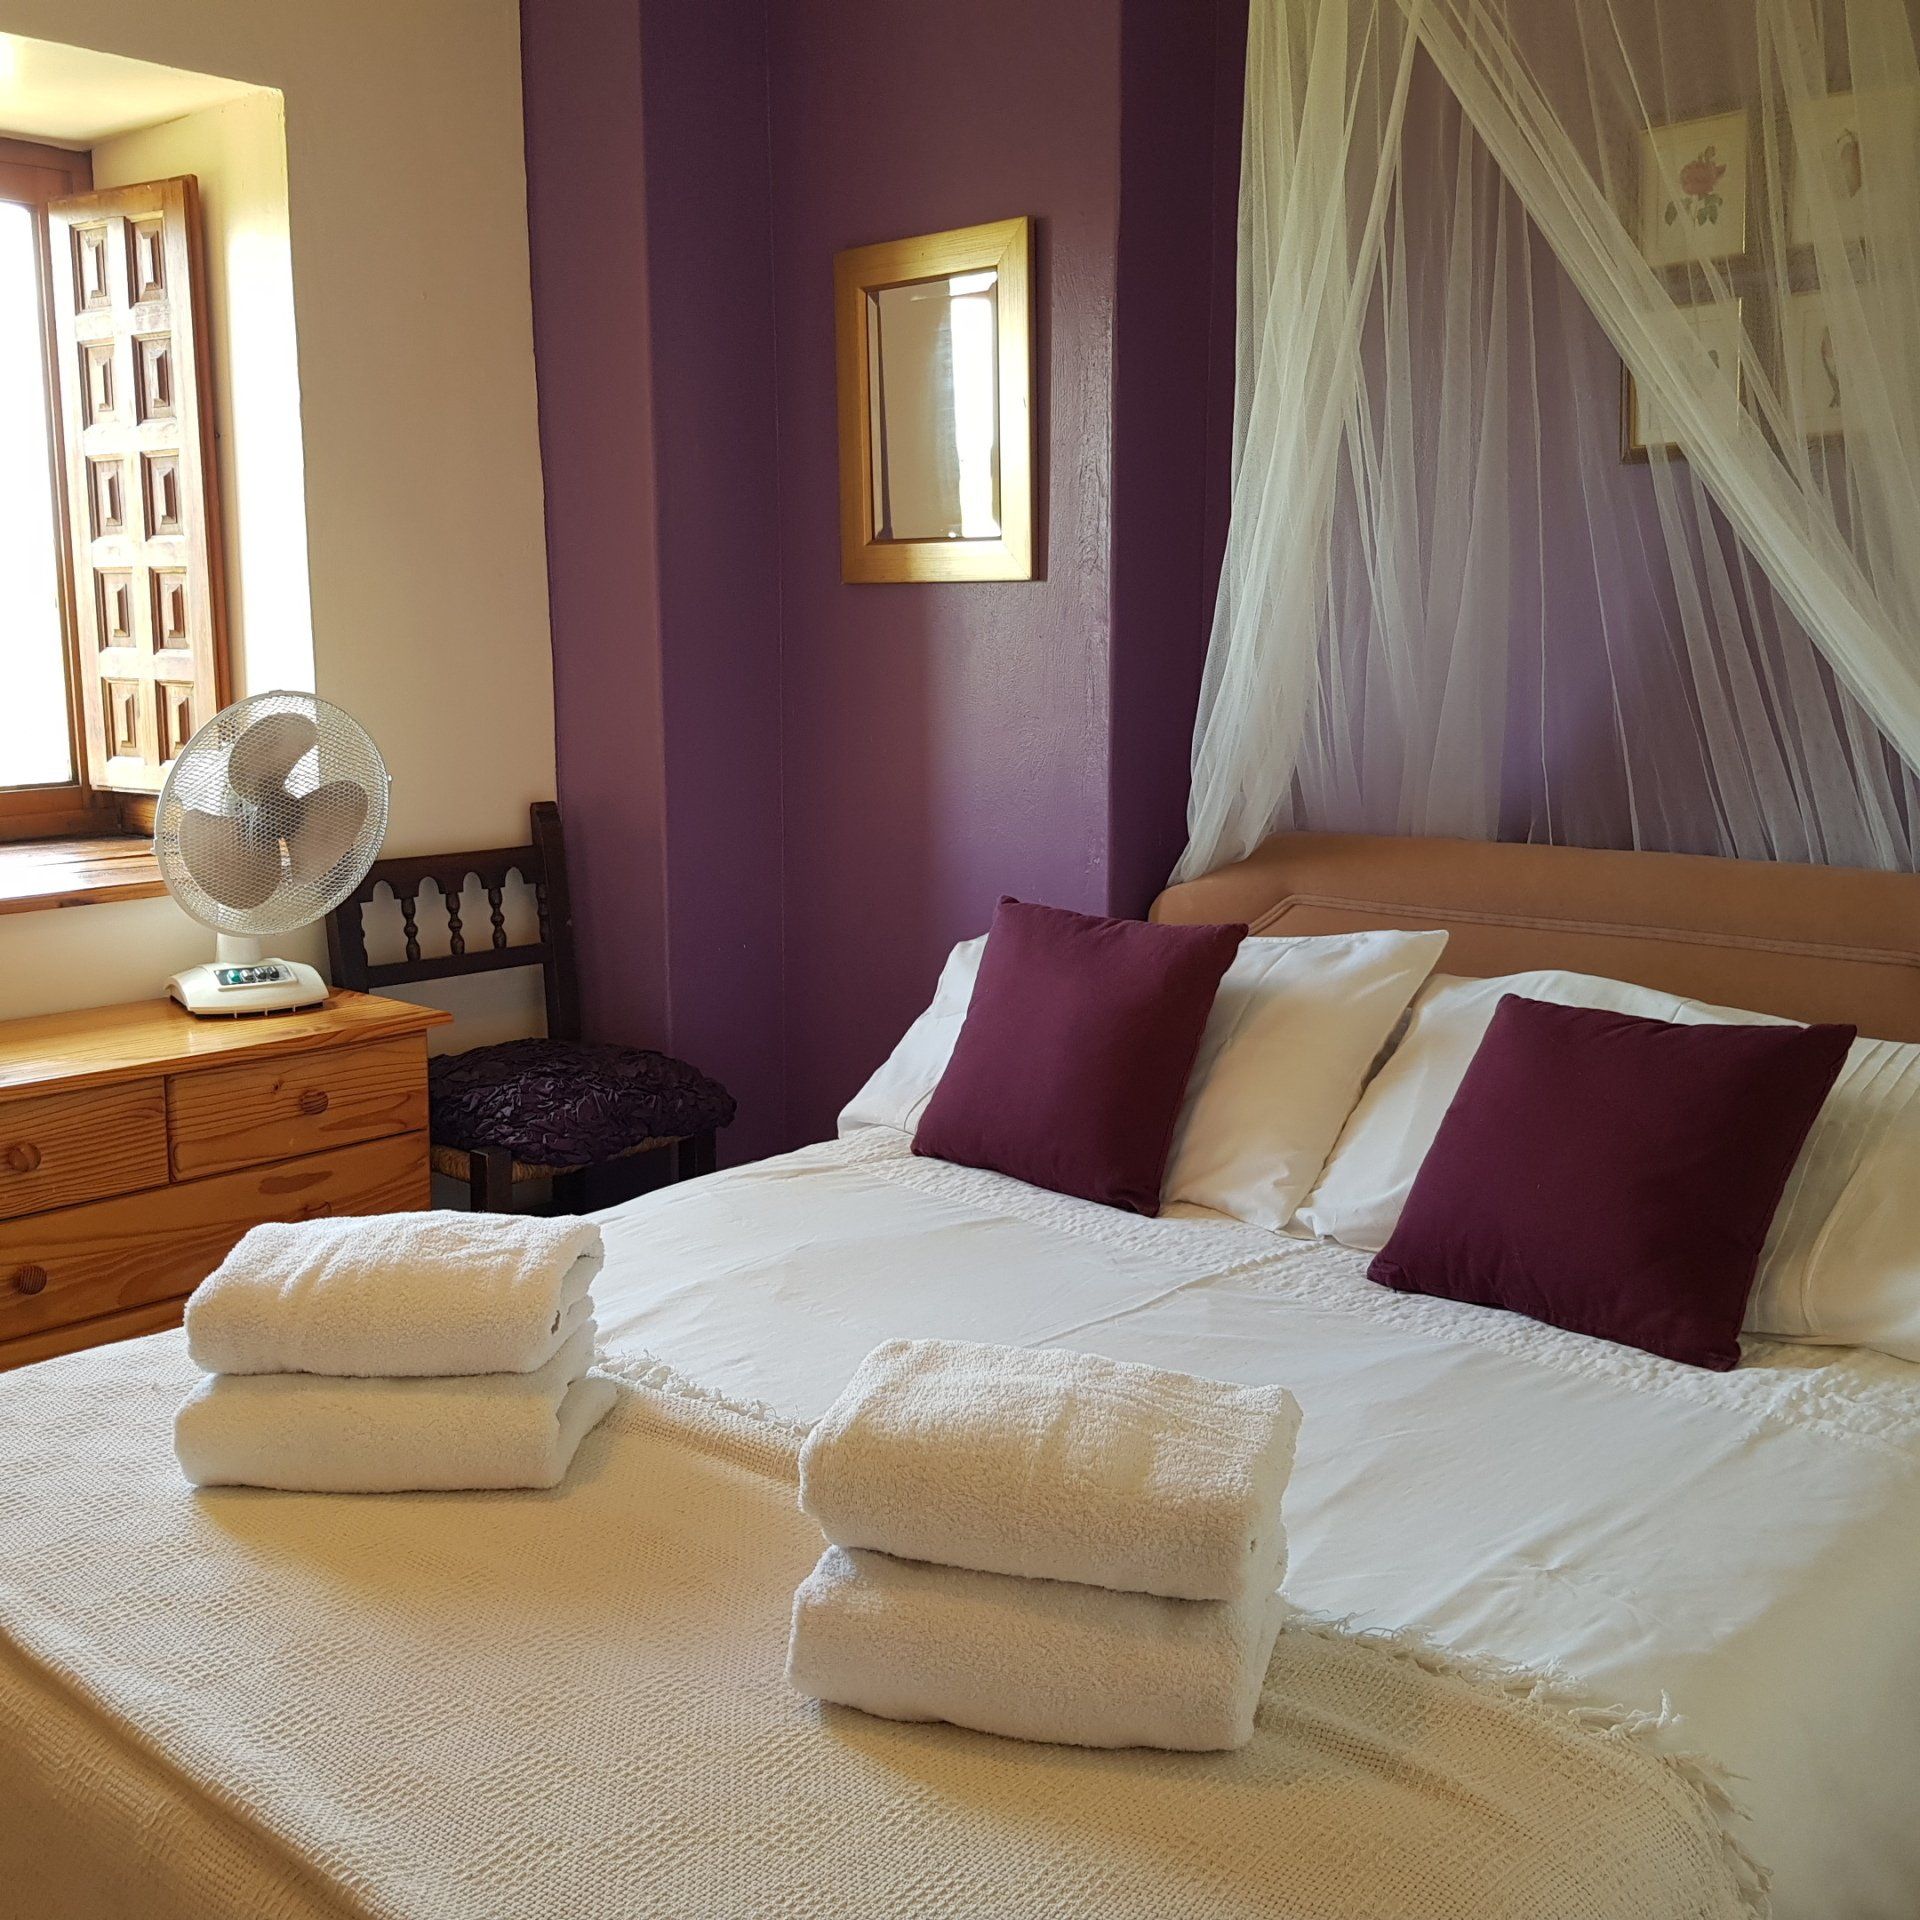 double bedroom with purple walls